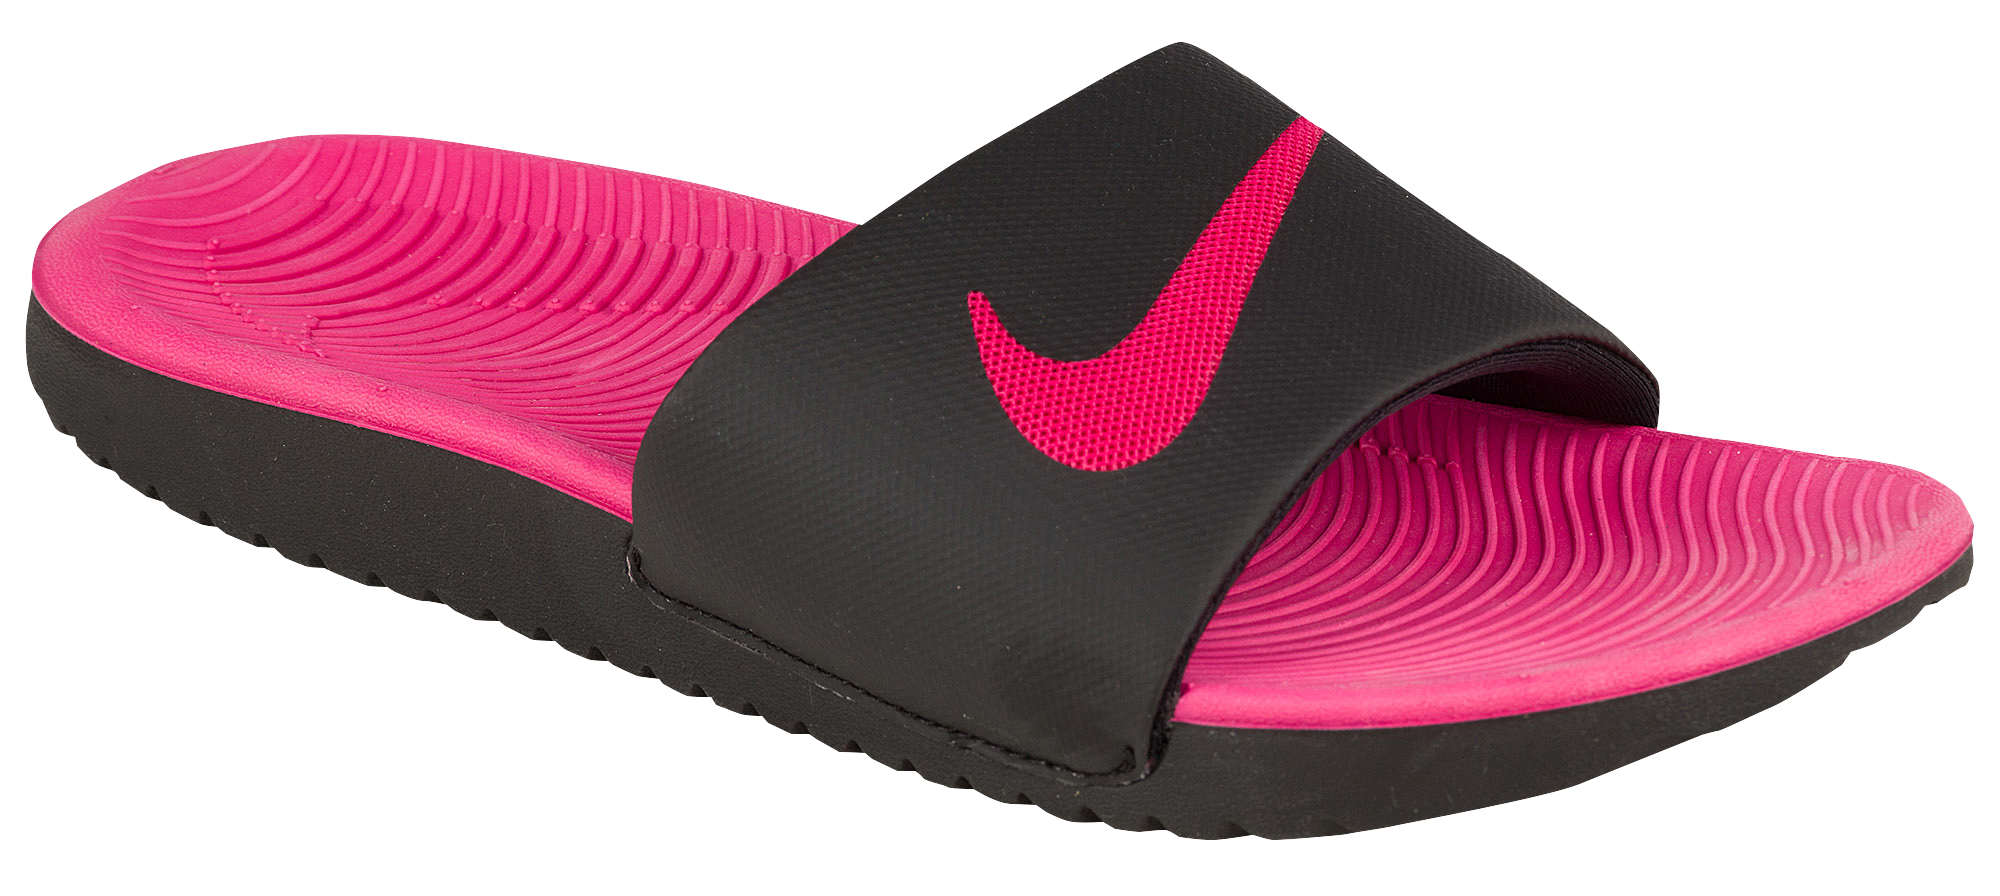 Nike Kawa Slide | Foot Locker